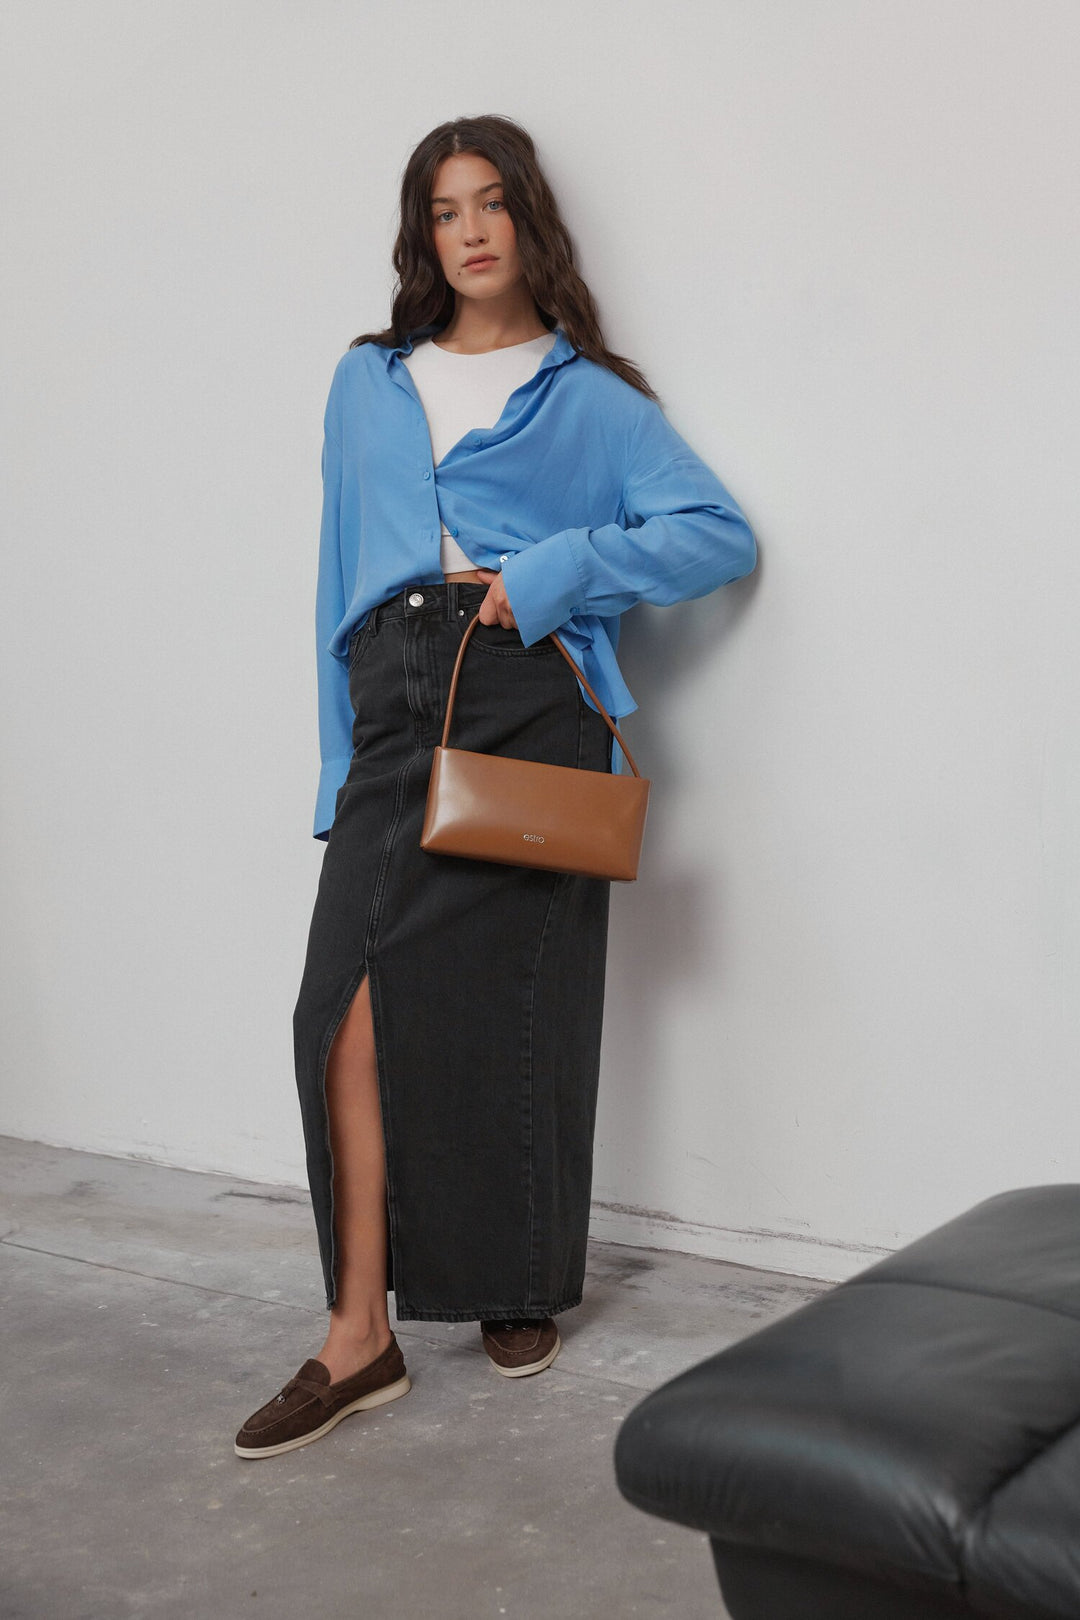 Women's brown leather handbag Estro - fully-stylized model.